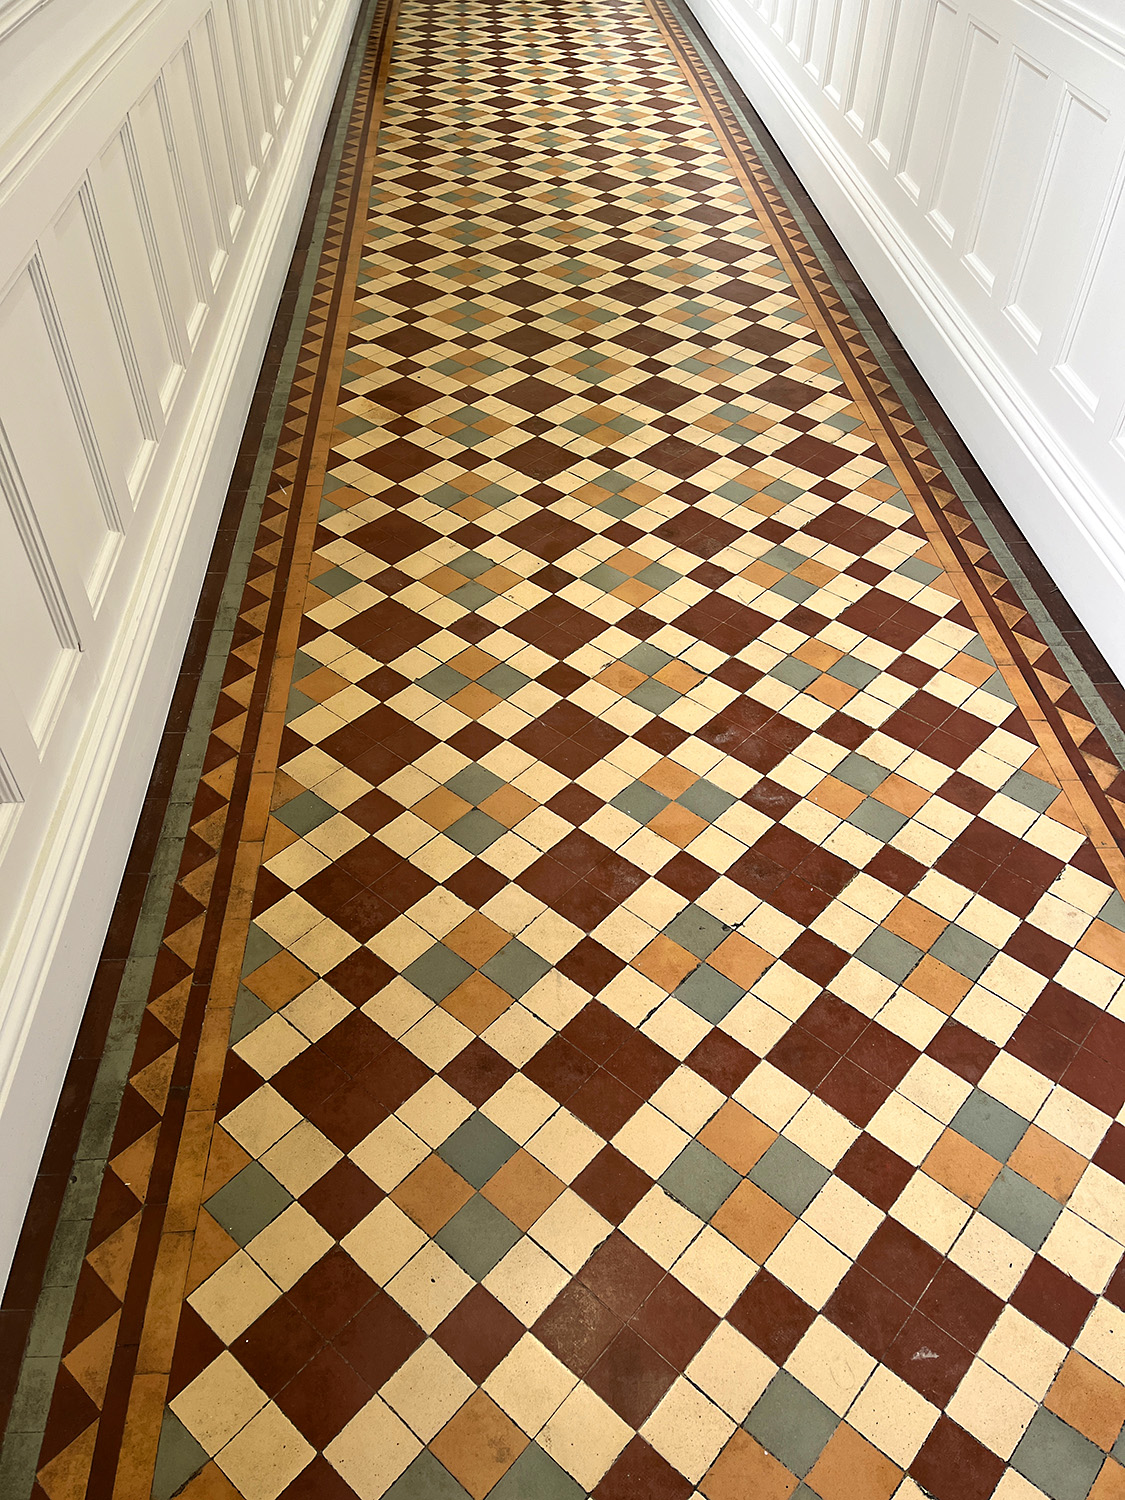 Original tile floors in the hallways of the admin building.